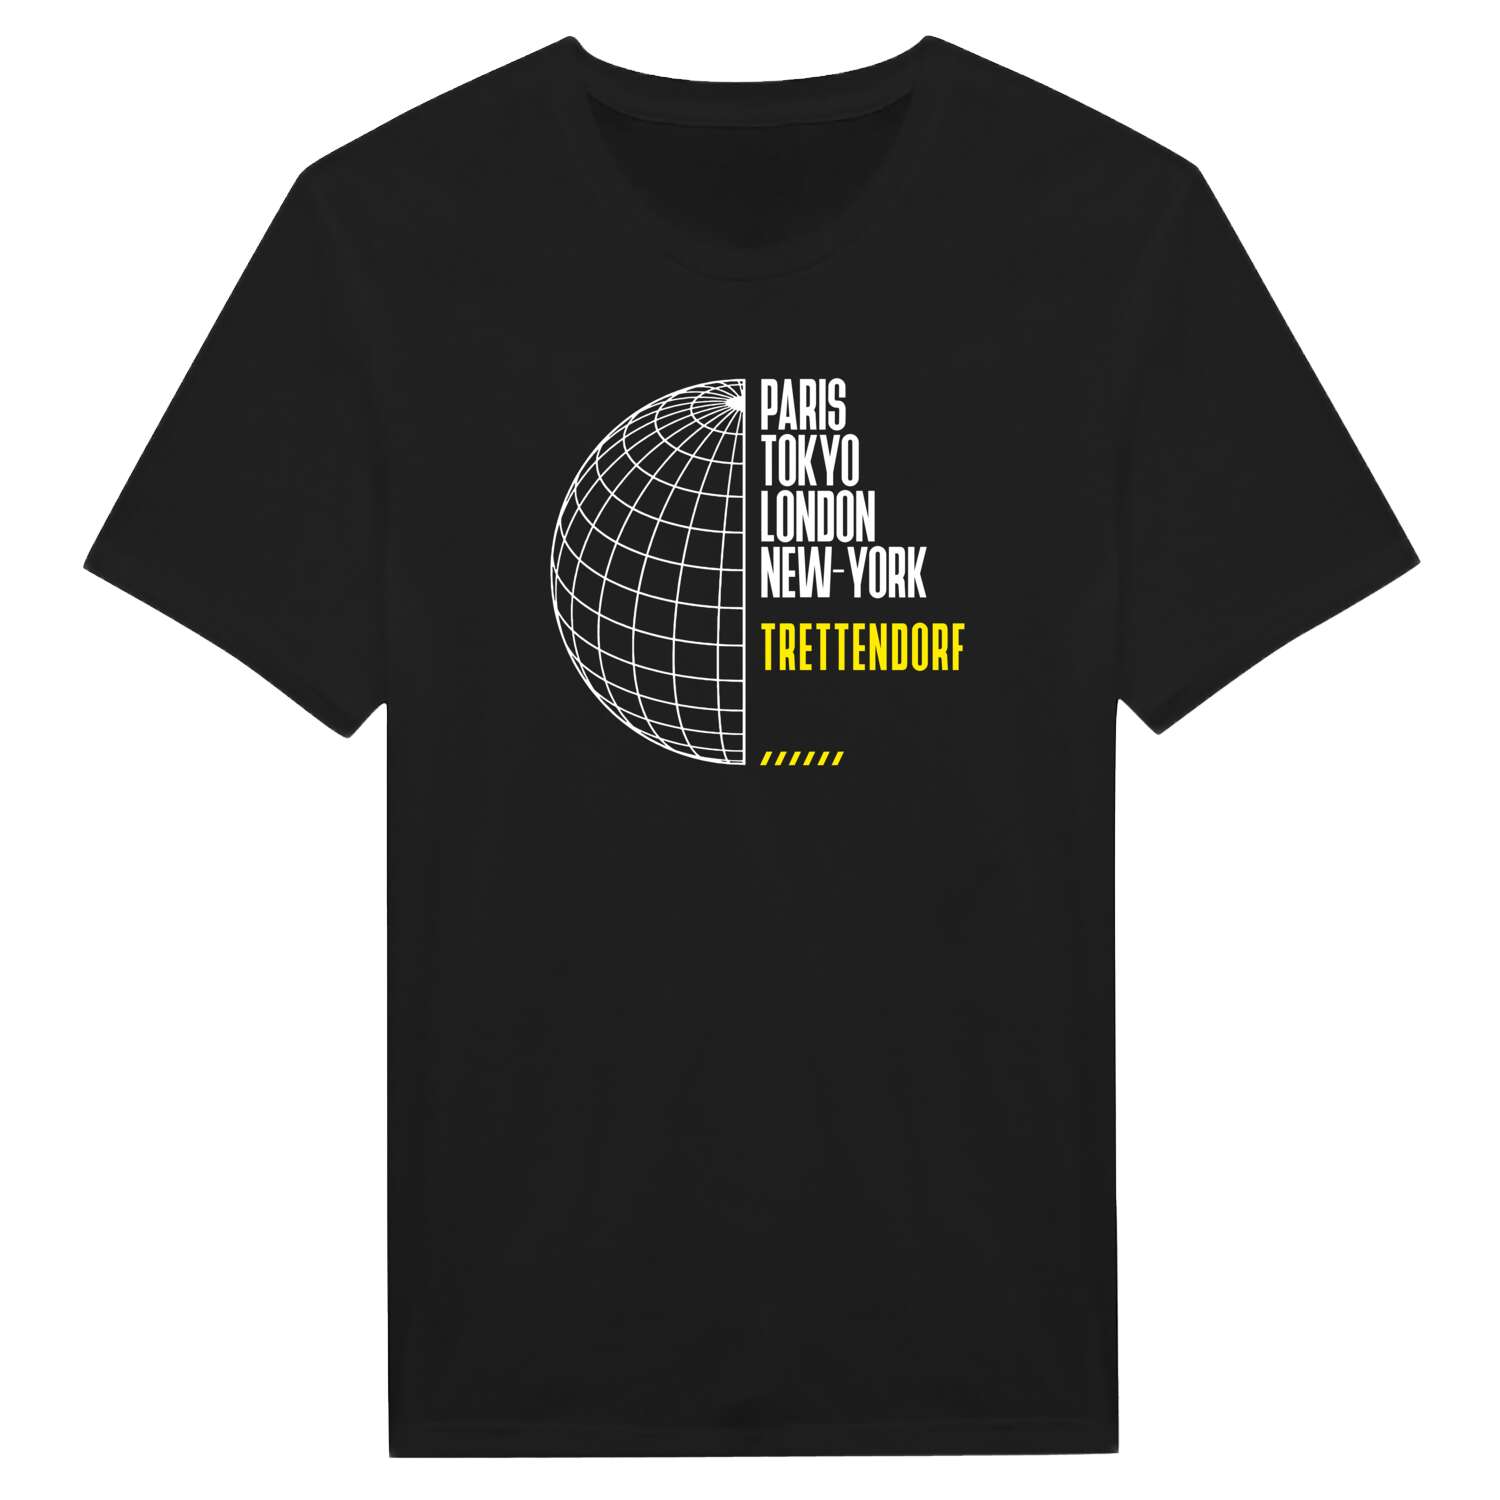 Trettendorf T-Shirt »Paris Tokyo London«